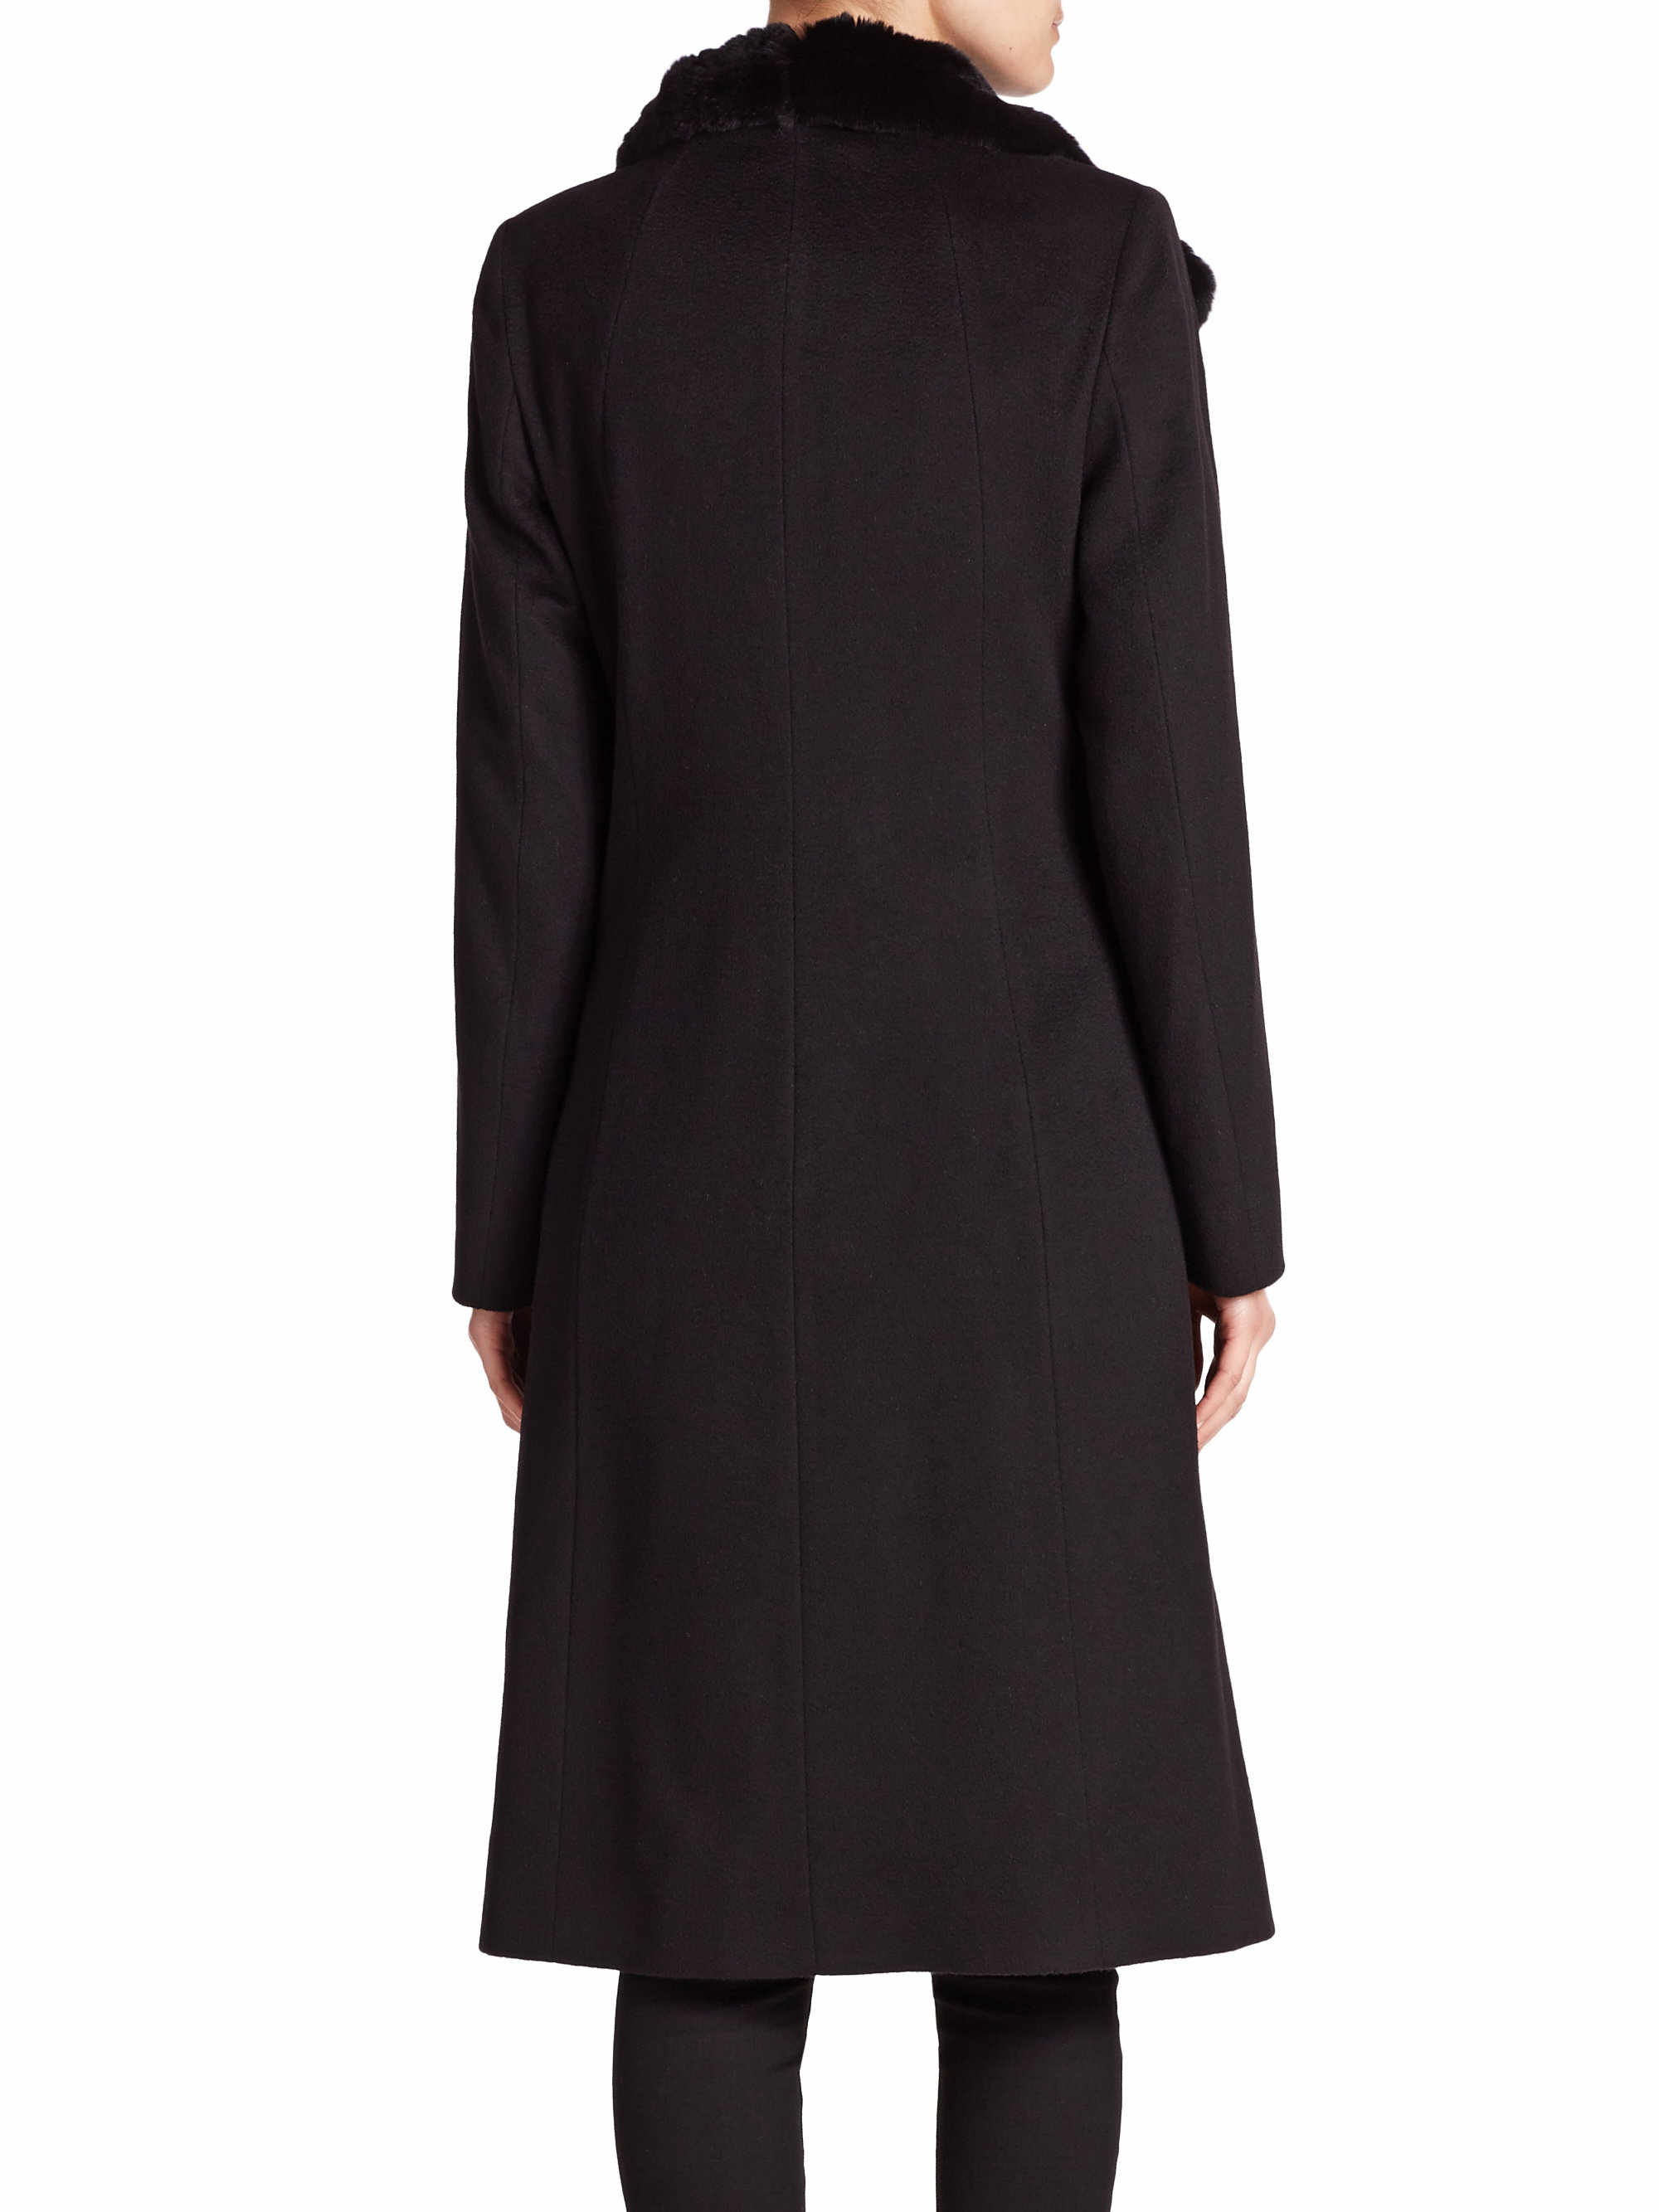 Cinzia rocca Fur-collar Wool Walking Coat in Black | Lyst